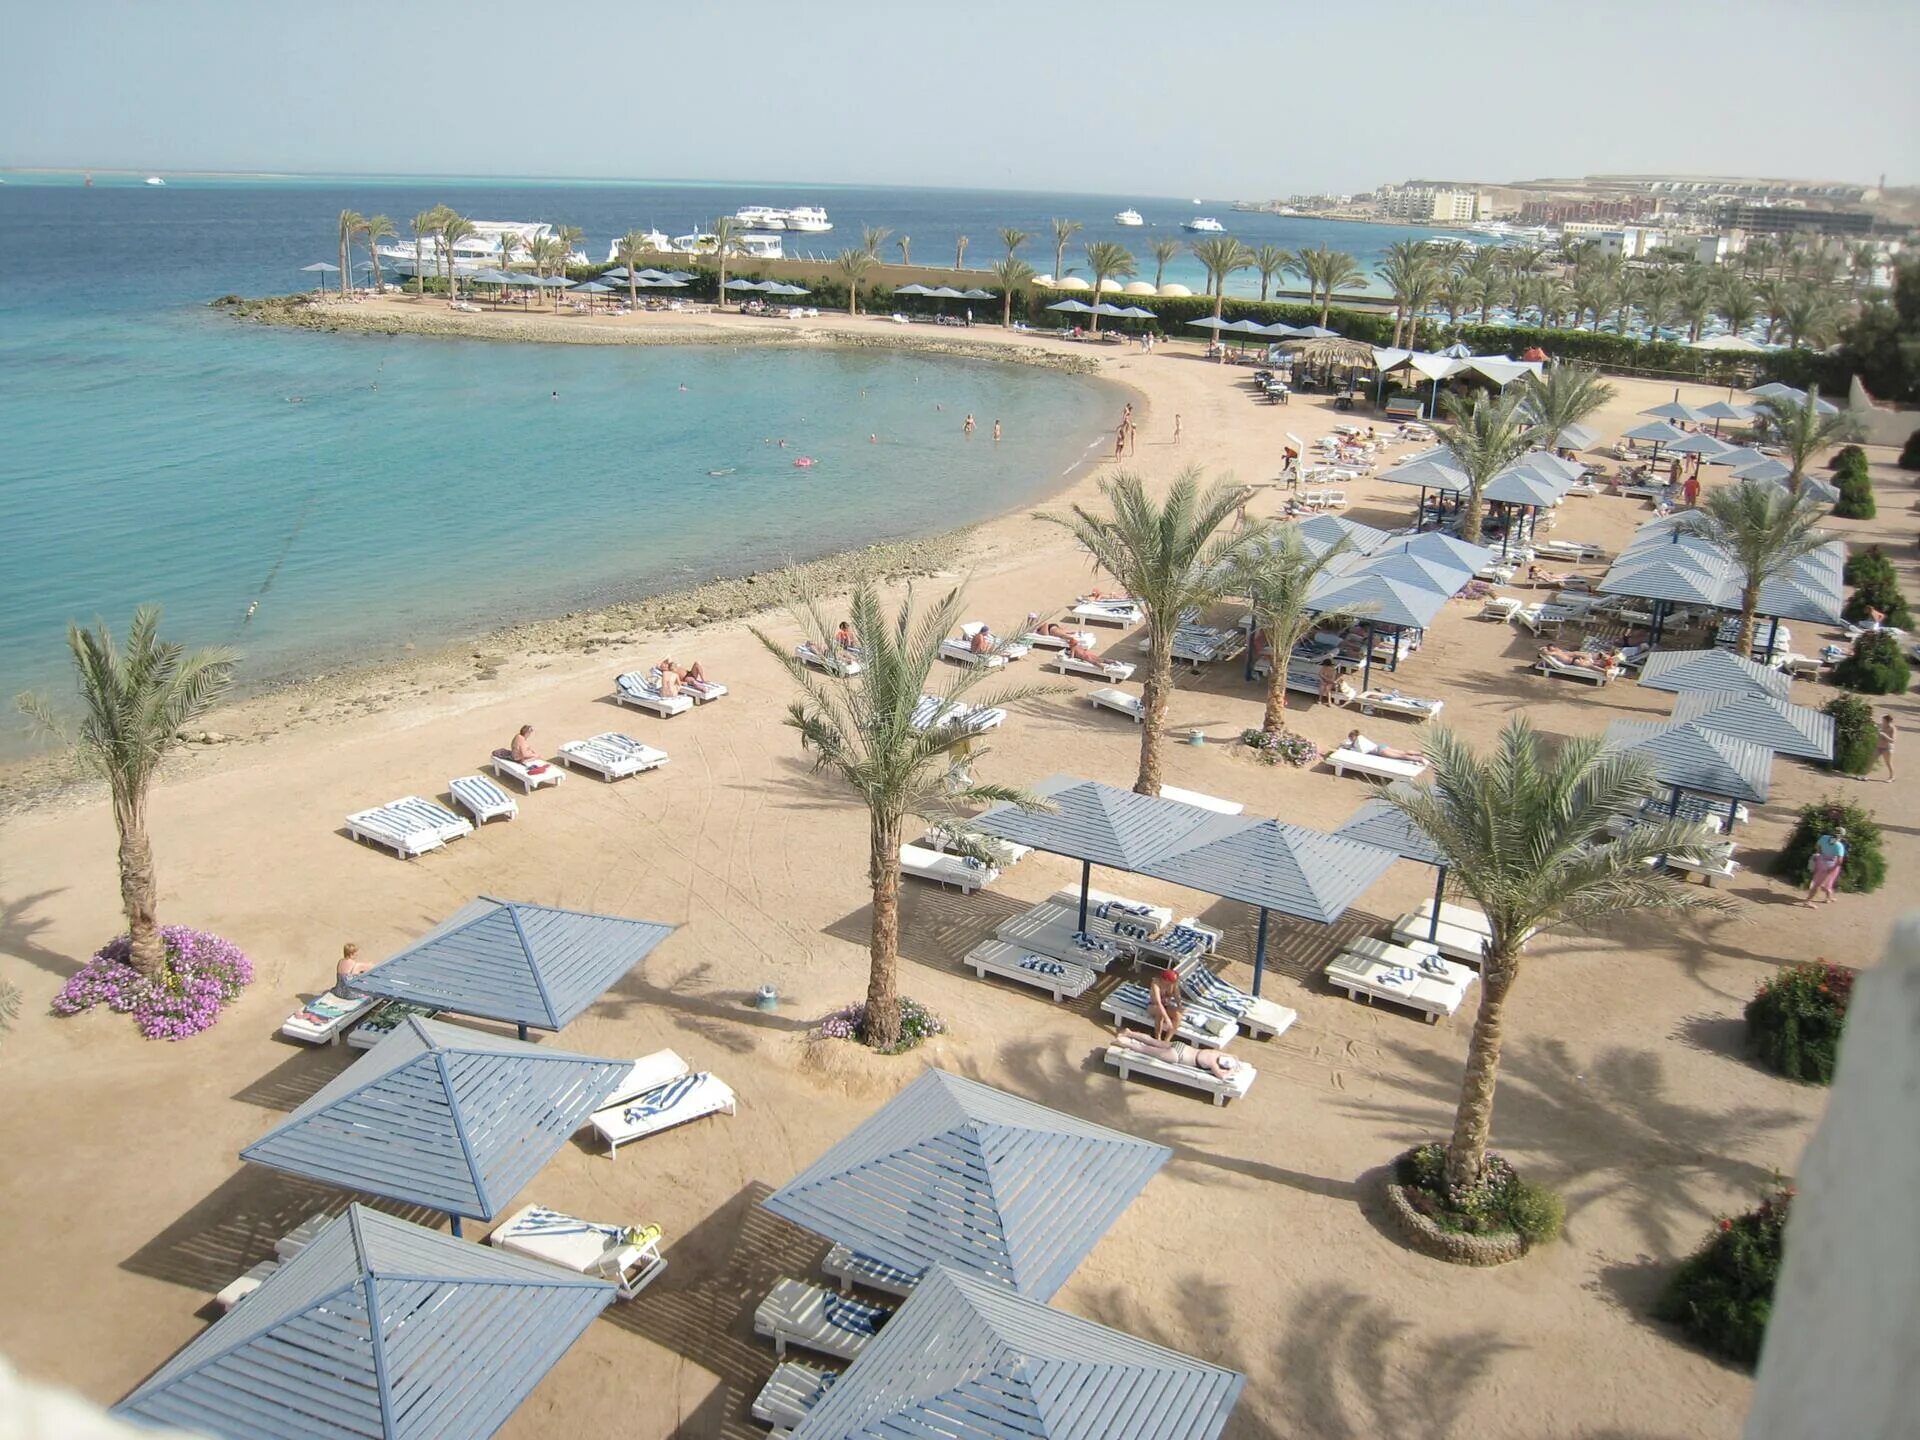 Хургада hurghada swiss inn hurghada. Отель в Хургаде Swiss Inn Resort Hurghada. Египет отель Реджина Хургада. Swiss Inn Resort Hurghada пляж.